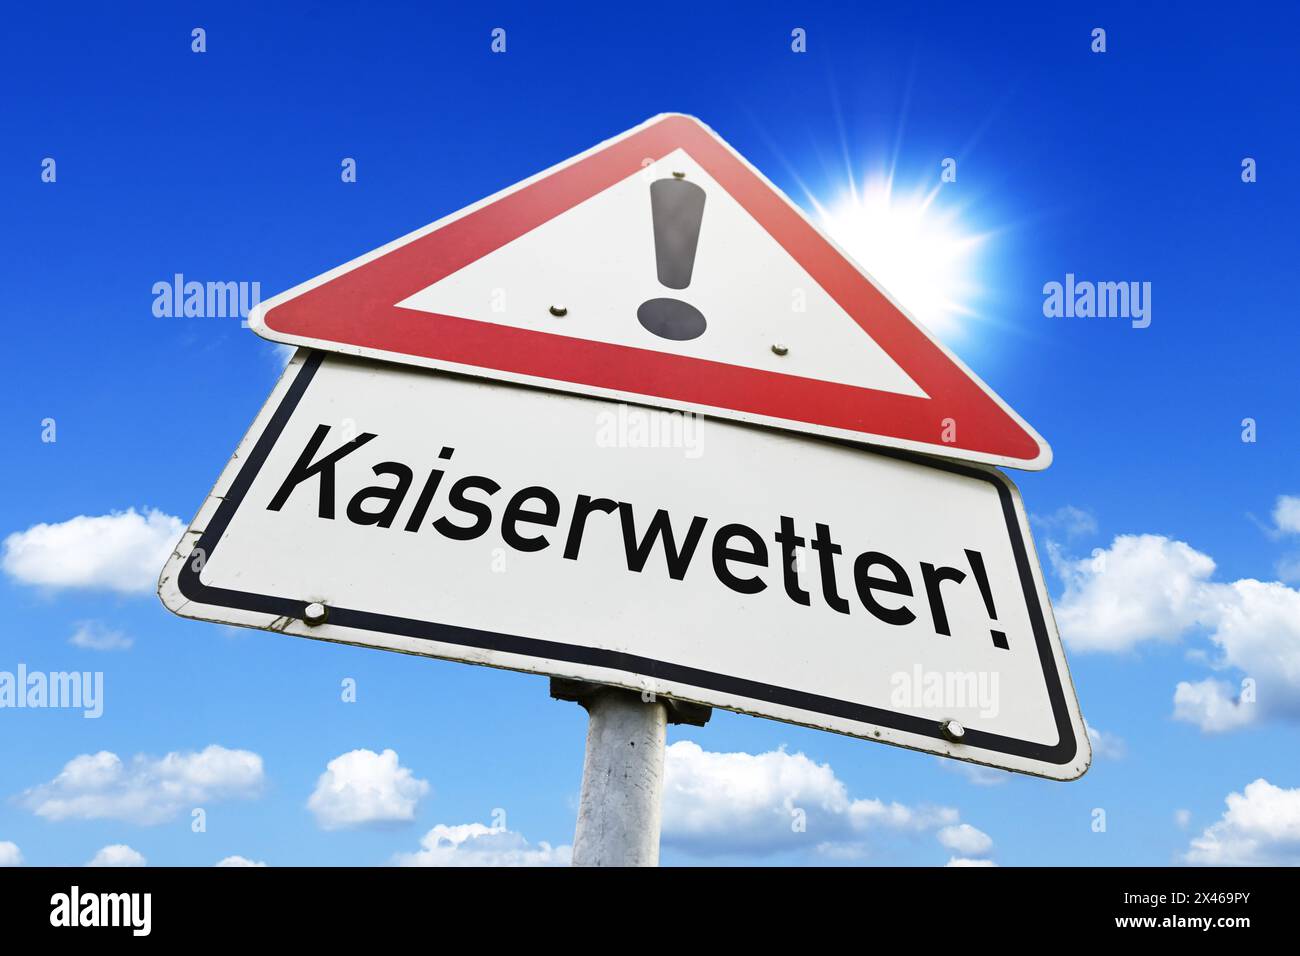 Kaiserwetter! Sign, Photomontage Stock Photo